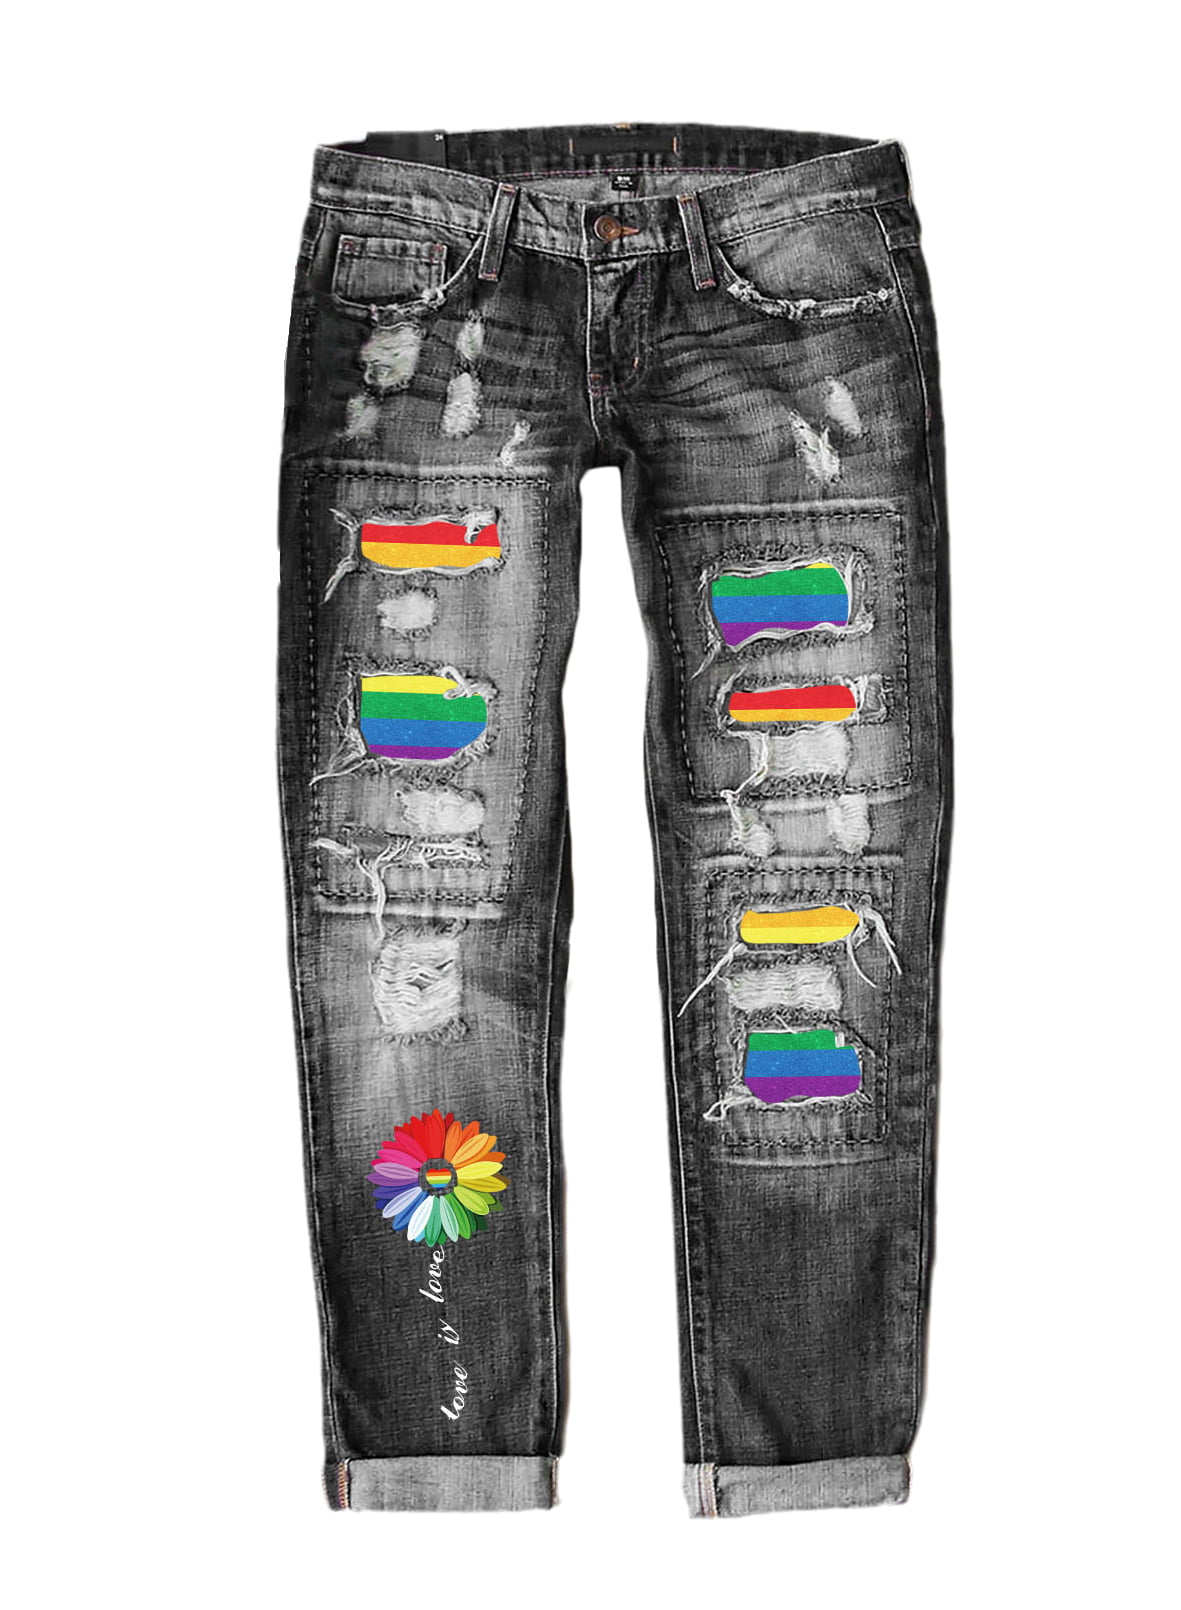 Painted Jeans rainbow - #Jeans #Painted #rainbow  Painted jeans, Painted  clothes diy, Painted clothes